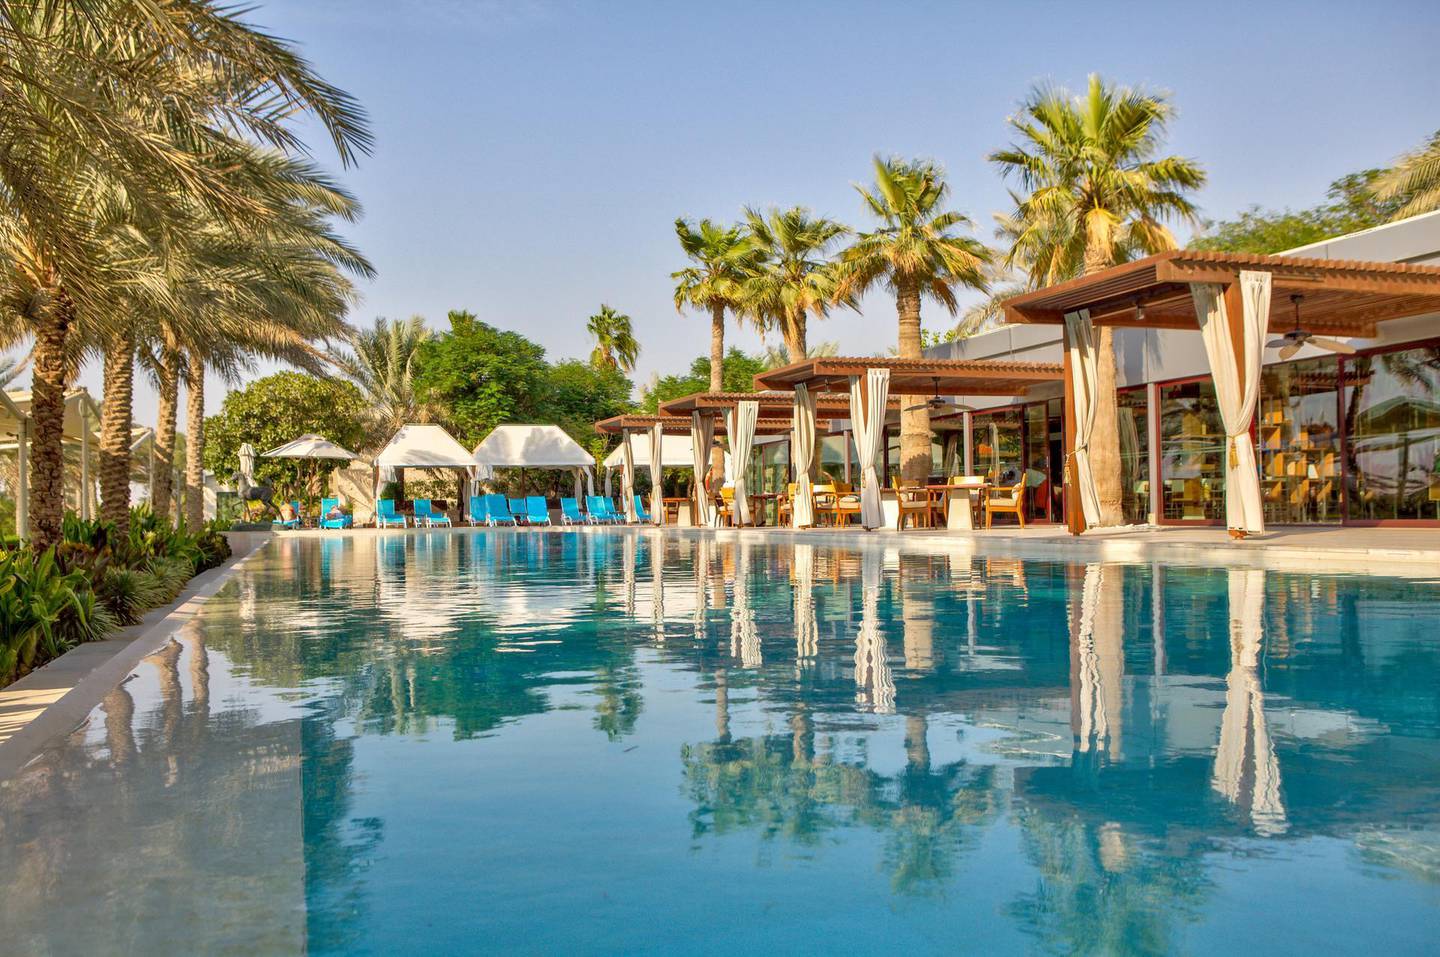 The infinity pool at Melia Desert Palm Dubai. Supplied